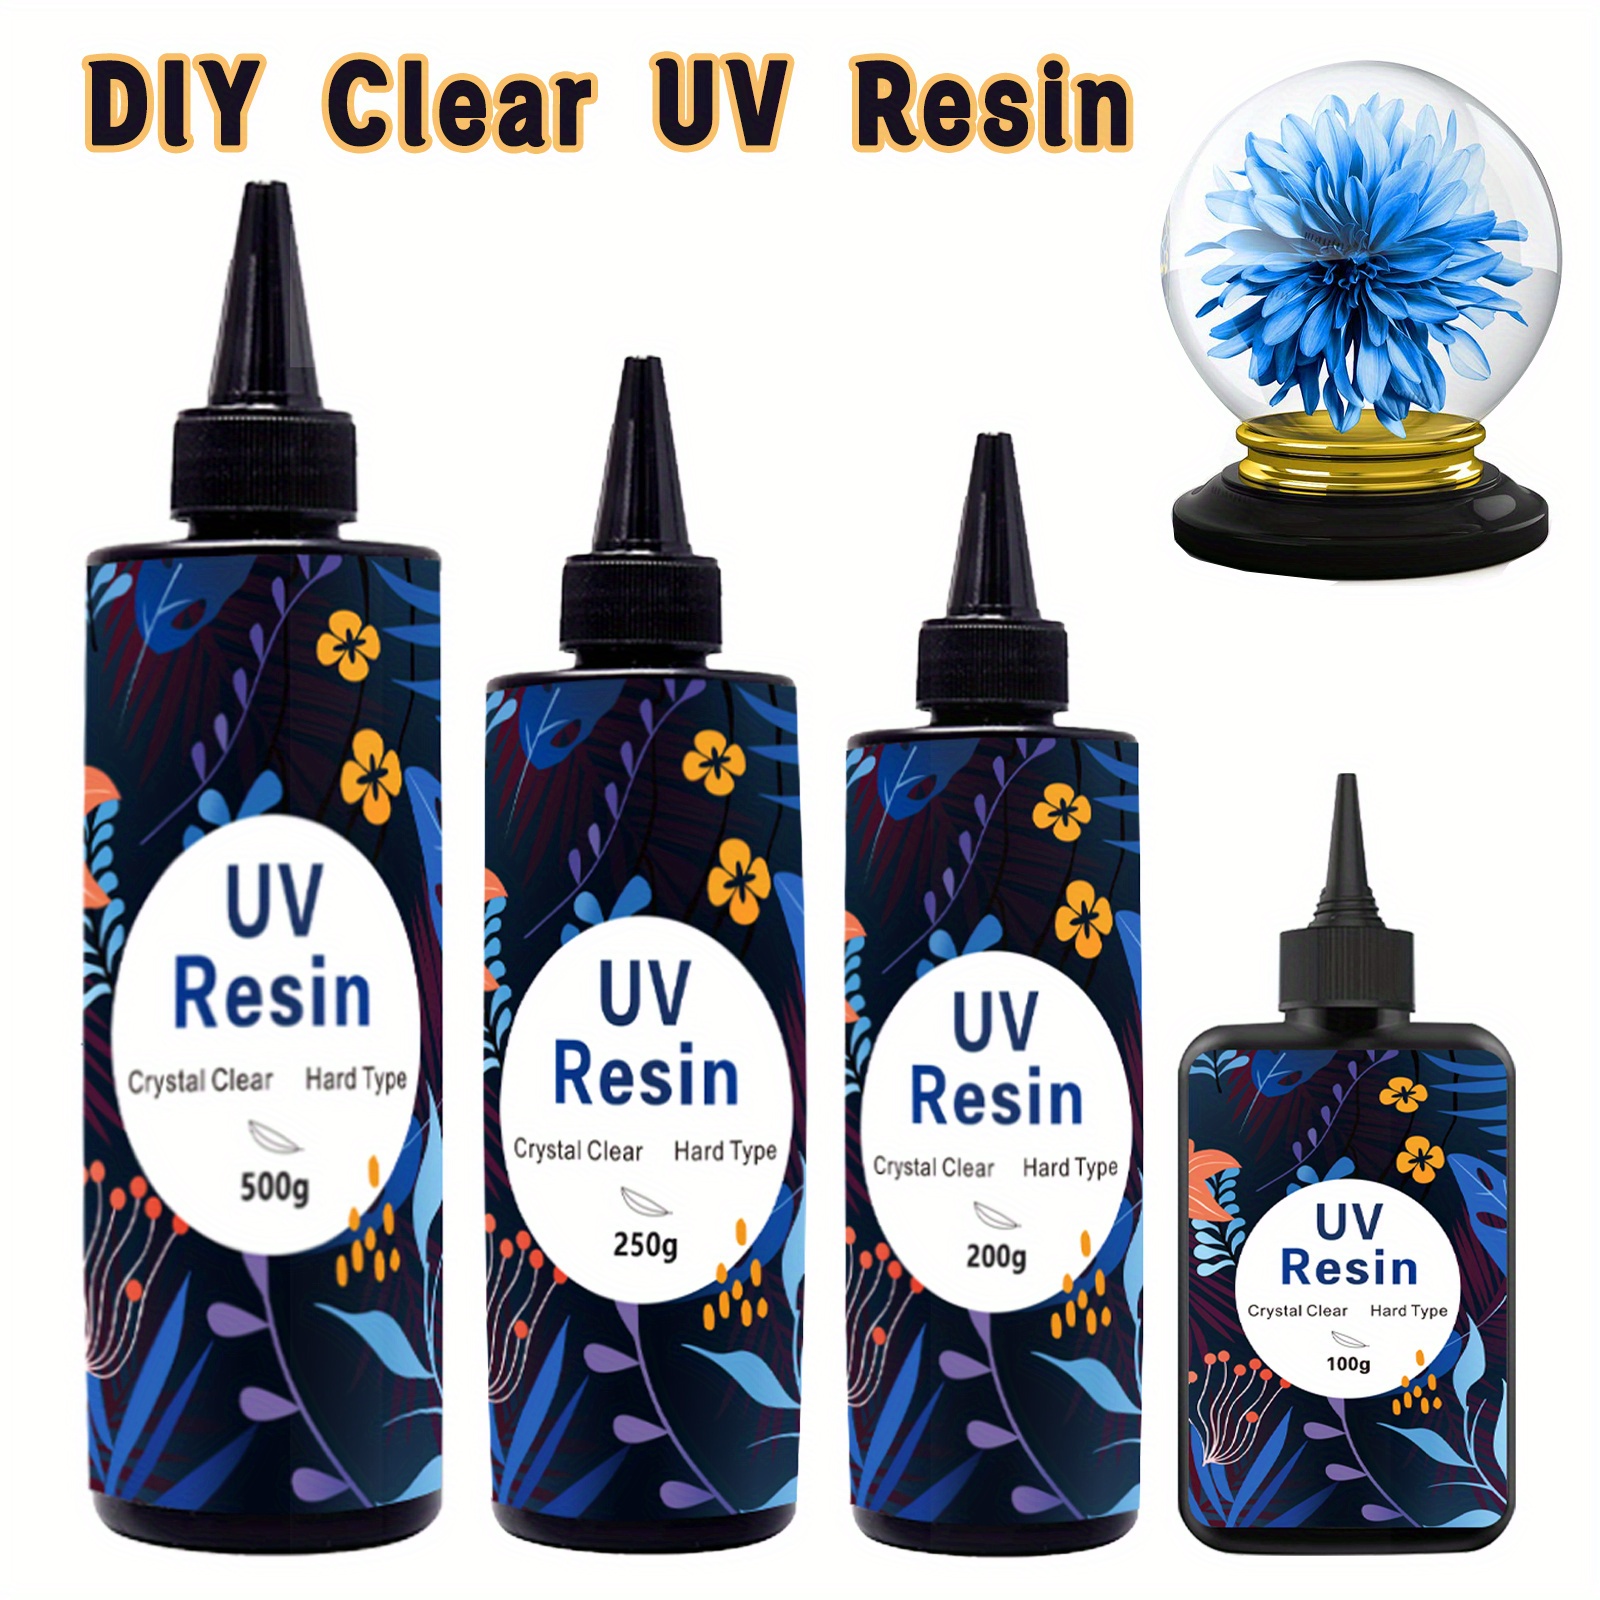 Clear UV Resin Hard - 60g, UV Resin Hard, Resin Jewelry